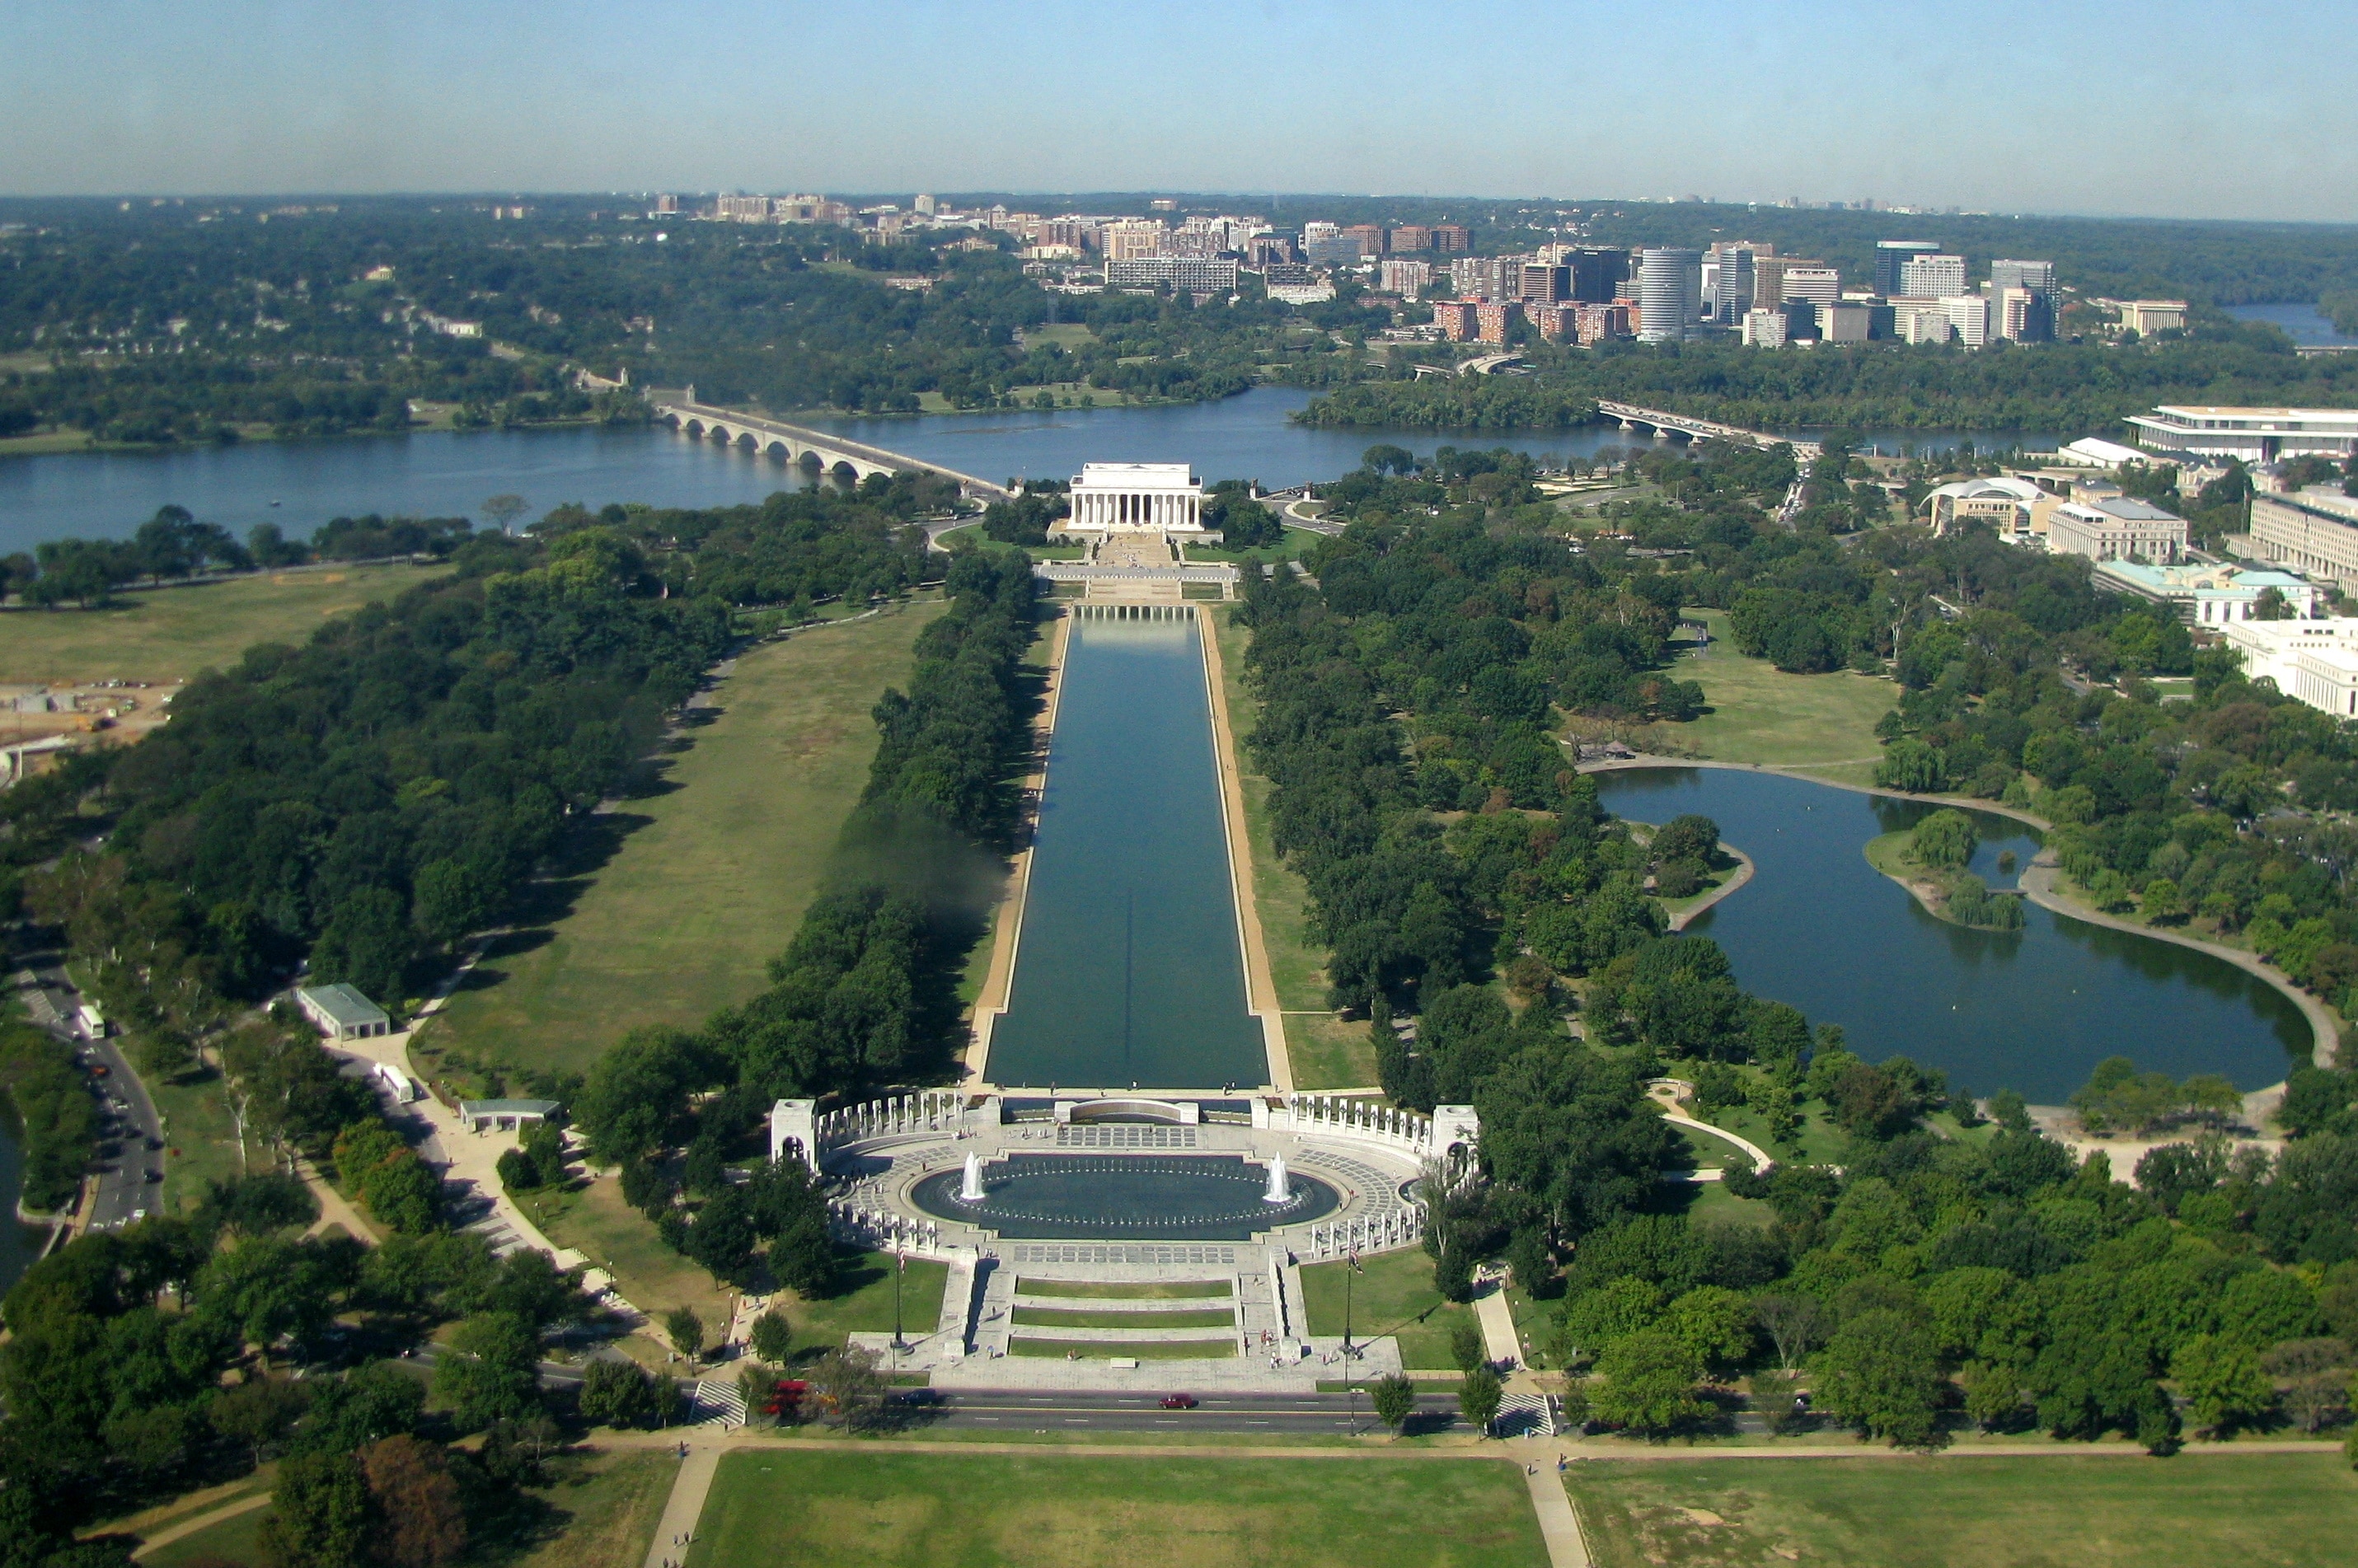 Lincoln Memorial Reflecting Pool, Washington, D.C., US